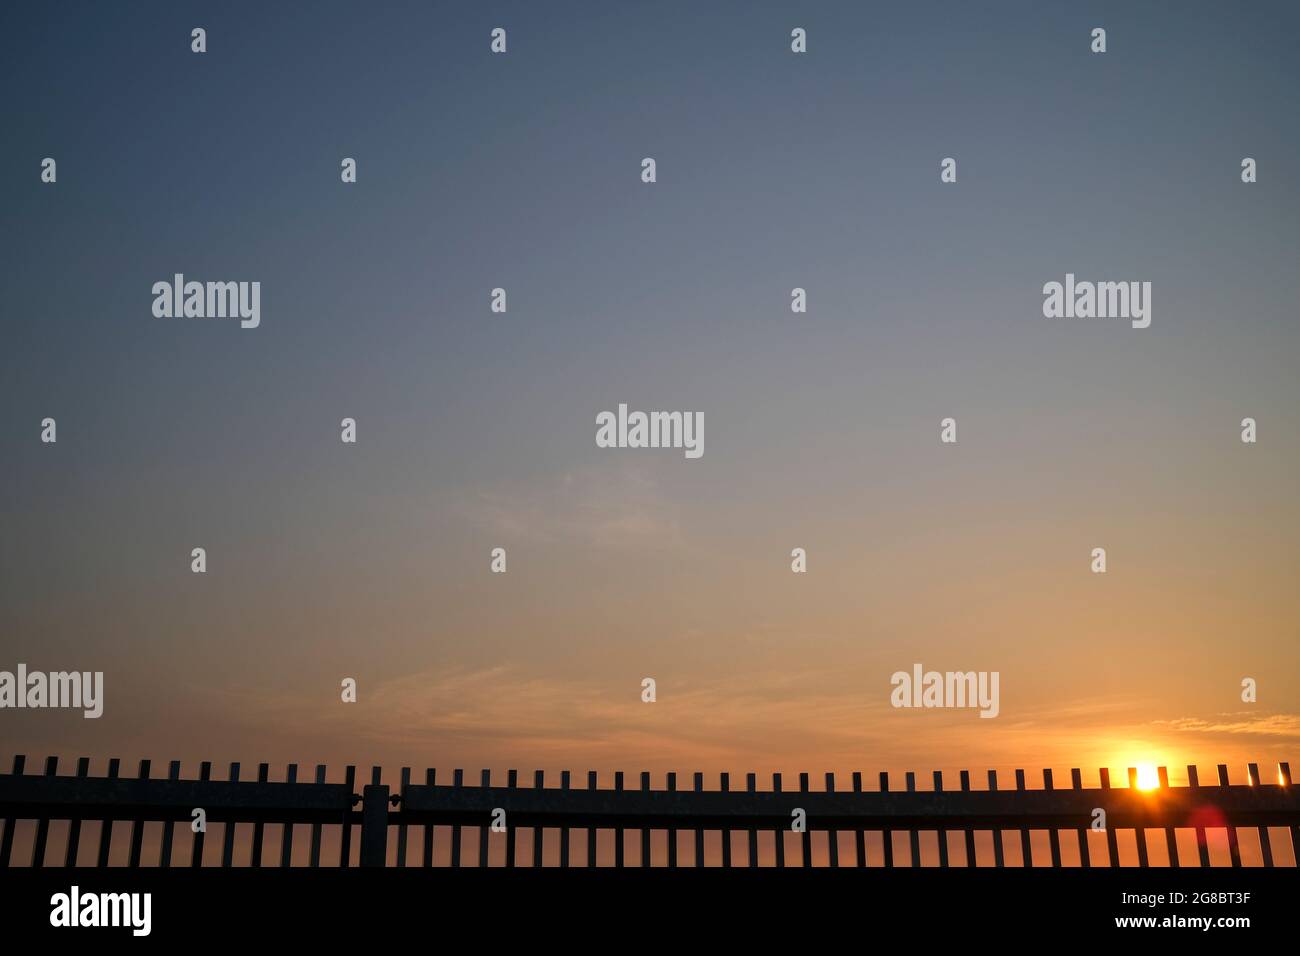 Sunrise over metallic fence Stock Photo